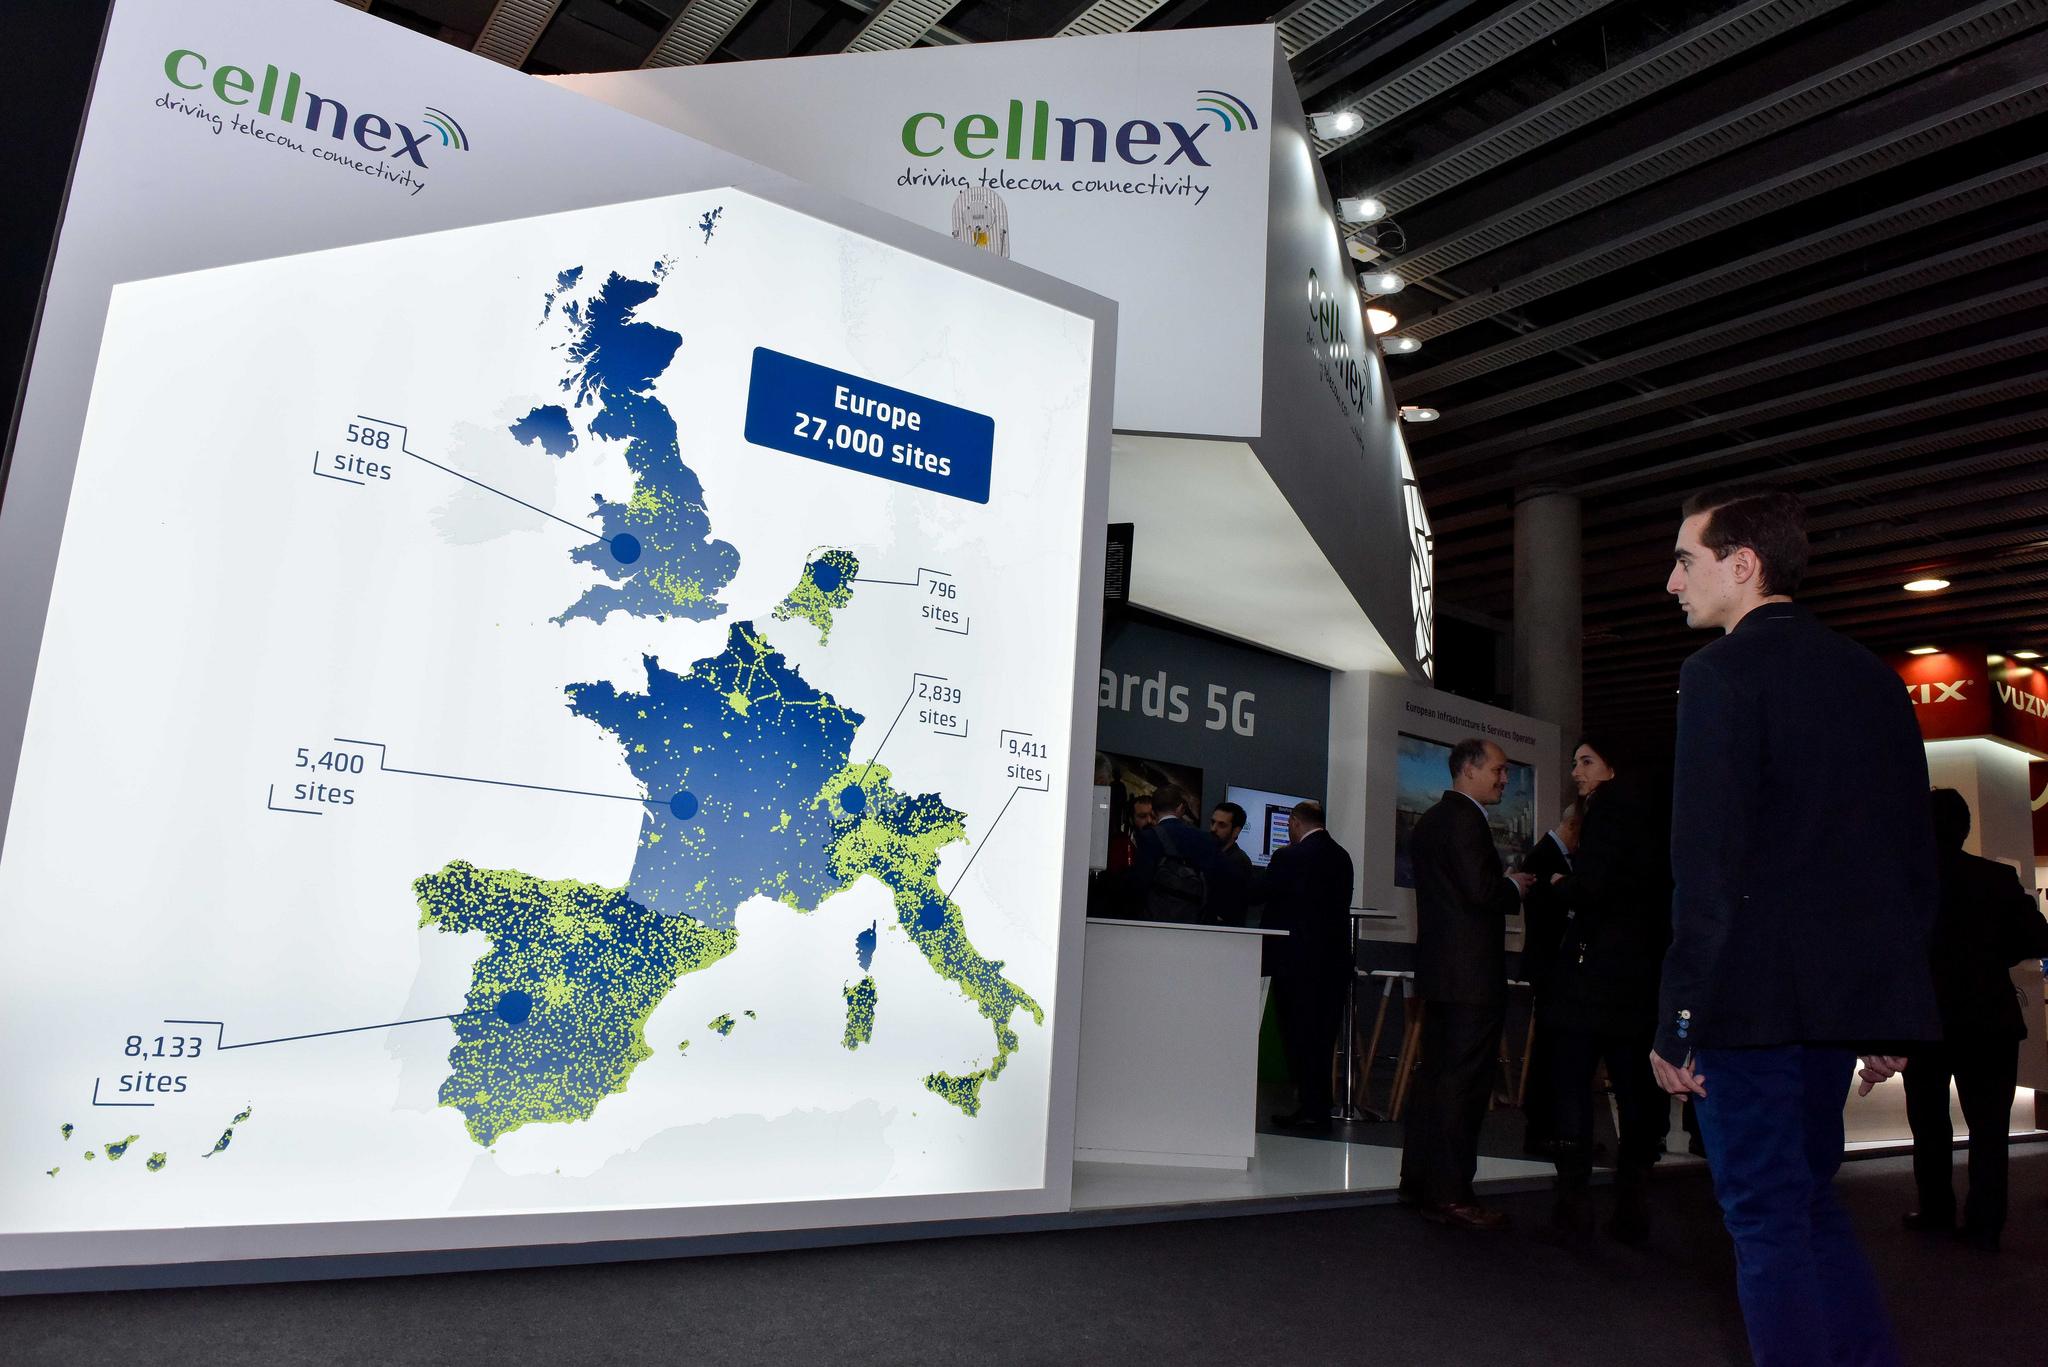 Detalle del 'stand' de Cellnex en el Mobile World Congress